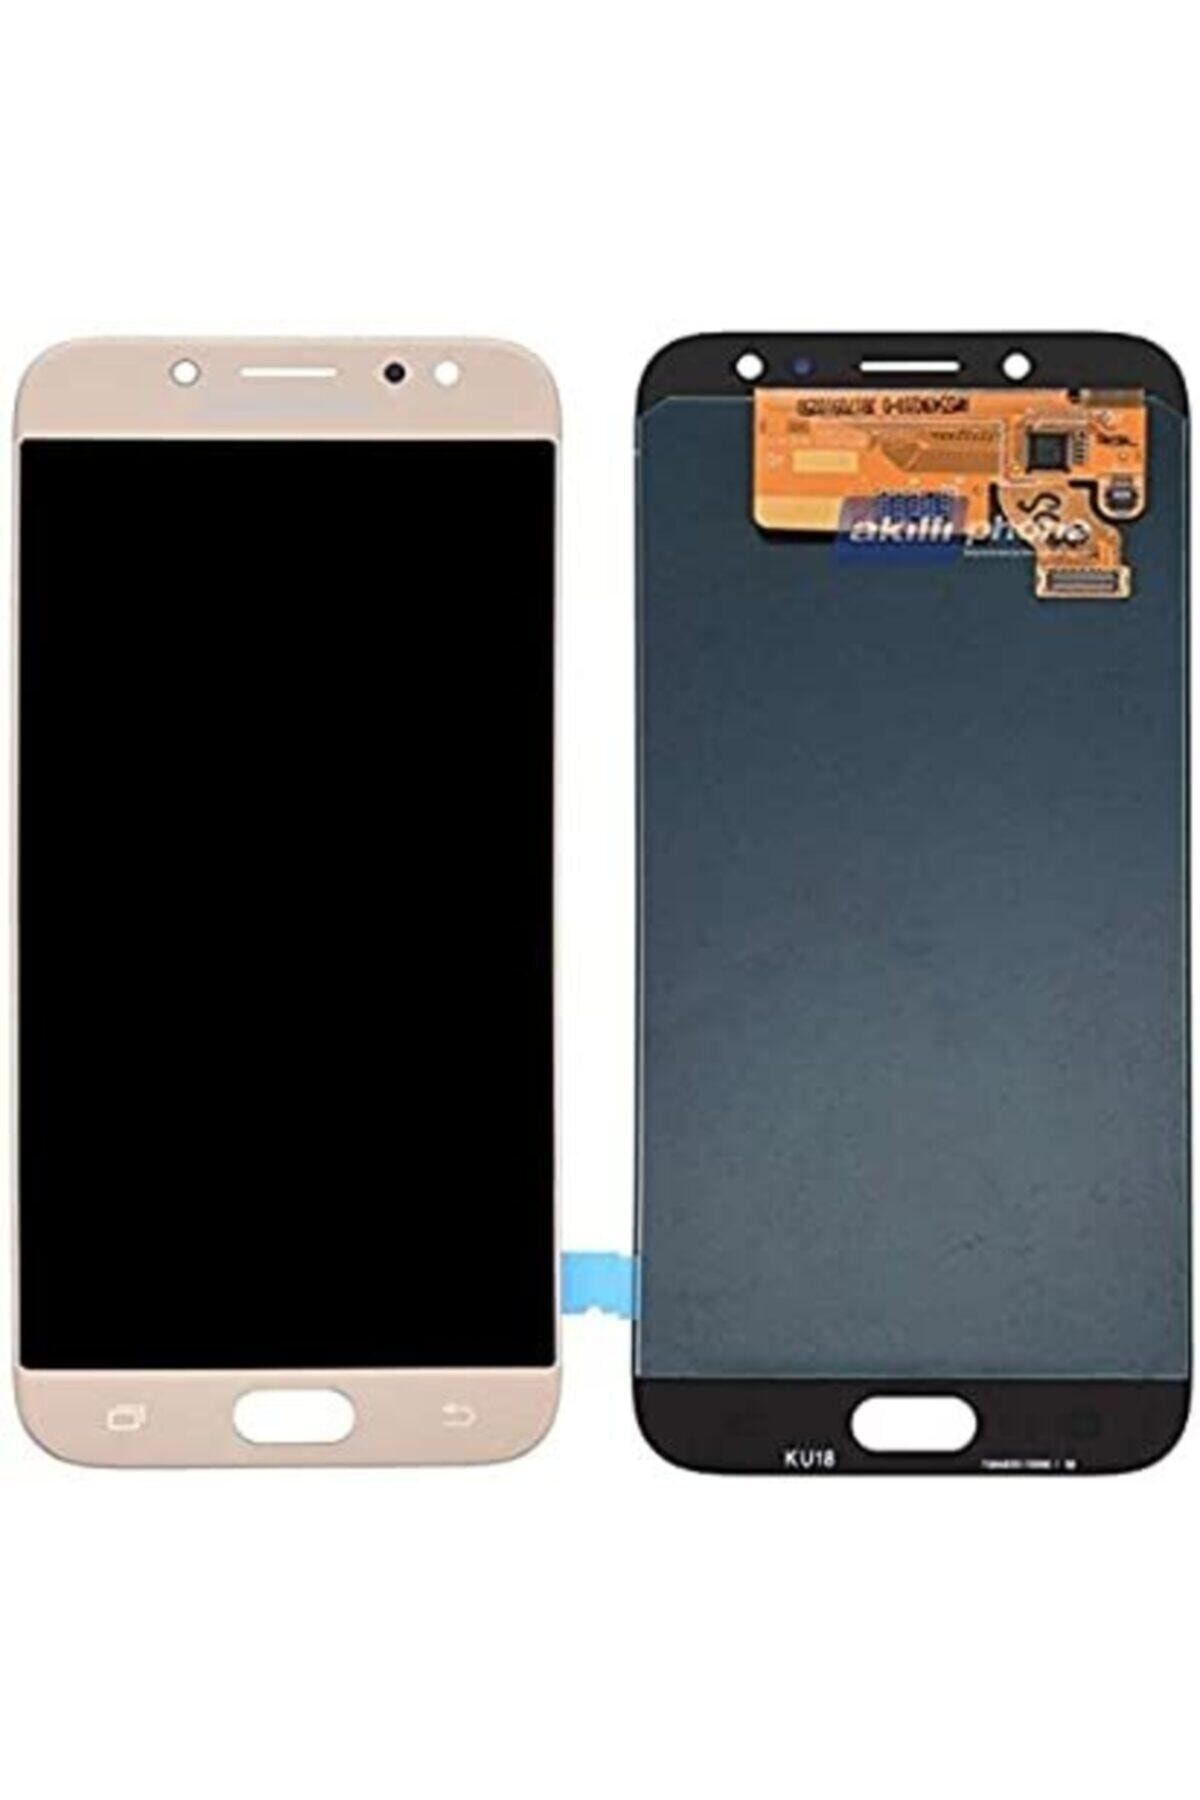 MİOSTORE Samsung Galaxy J730f J7 Pro Lcd Ekran Dokunmatik Süper A Kalite Gold Renk Yapıştırıcı Hediyeli